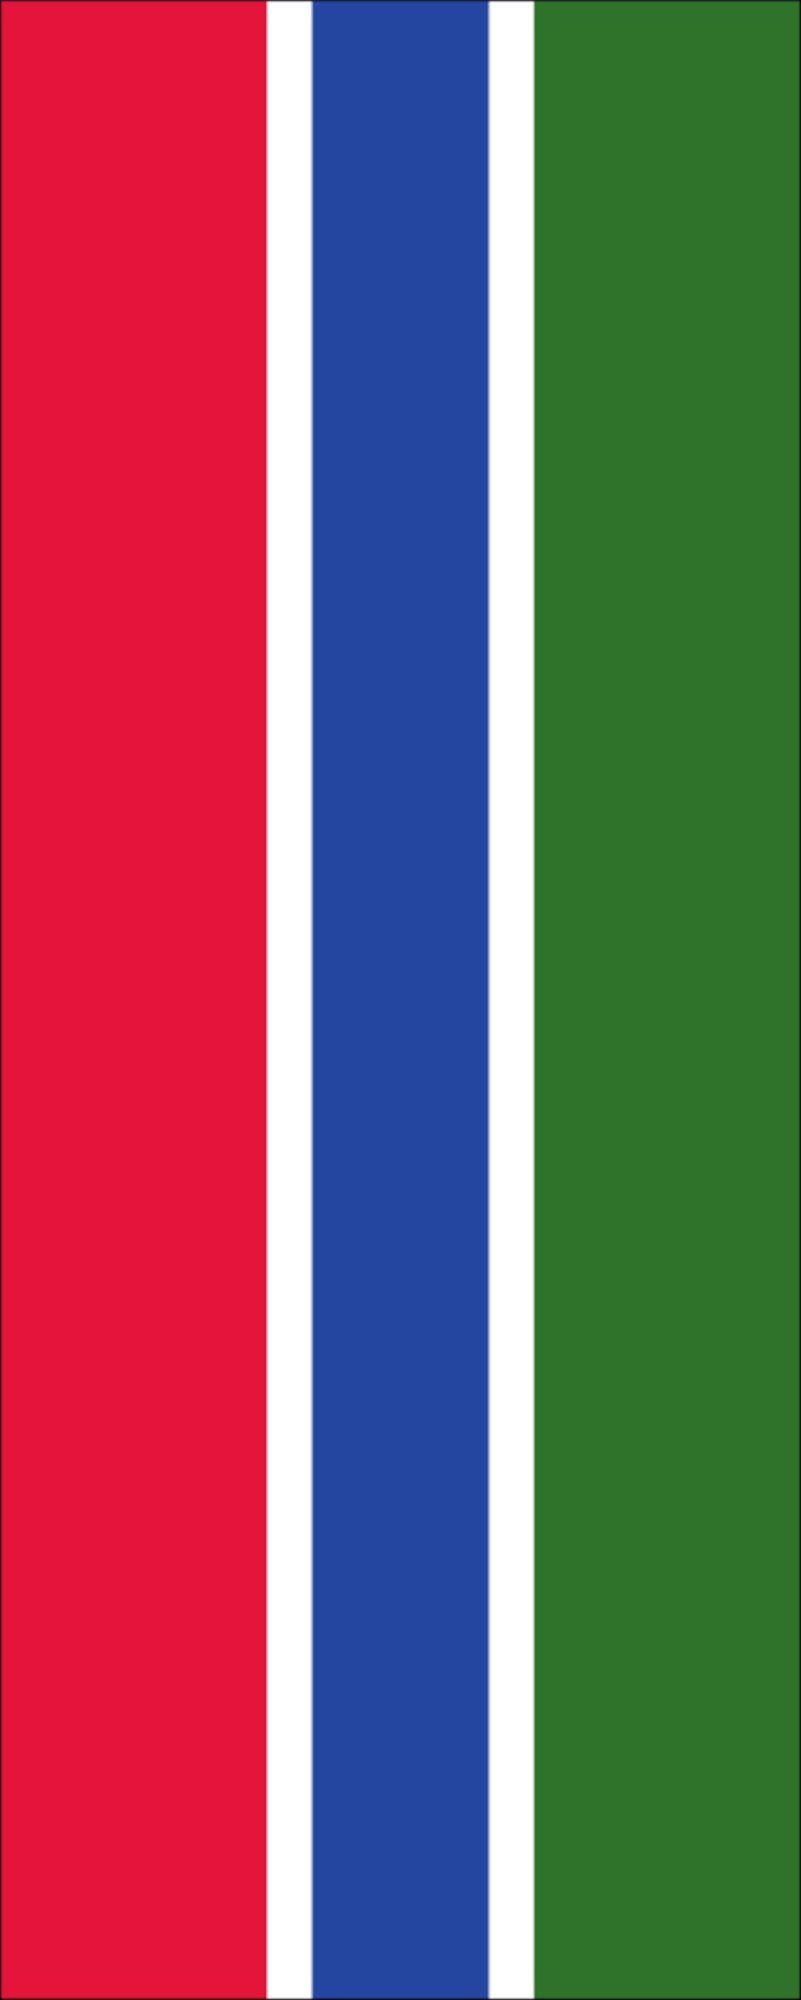 flaggenmeer Flagge Flagge Gambia 110 g/m² Hochformat